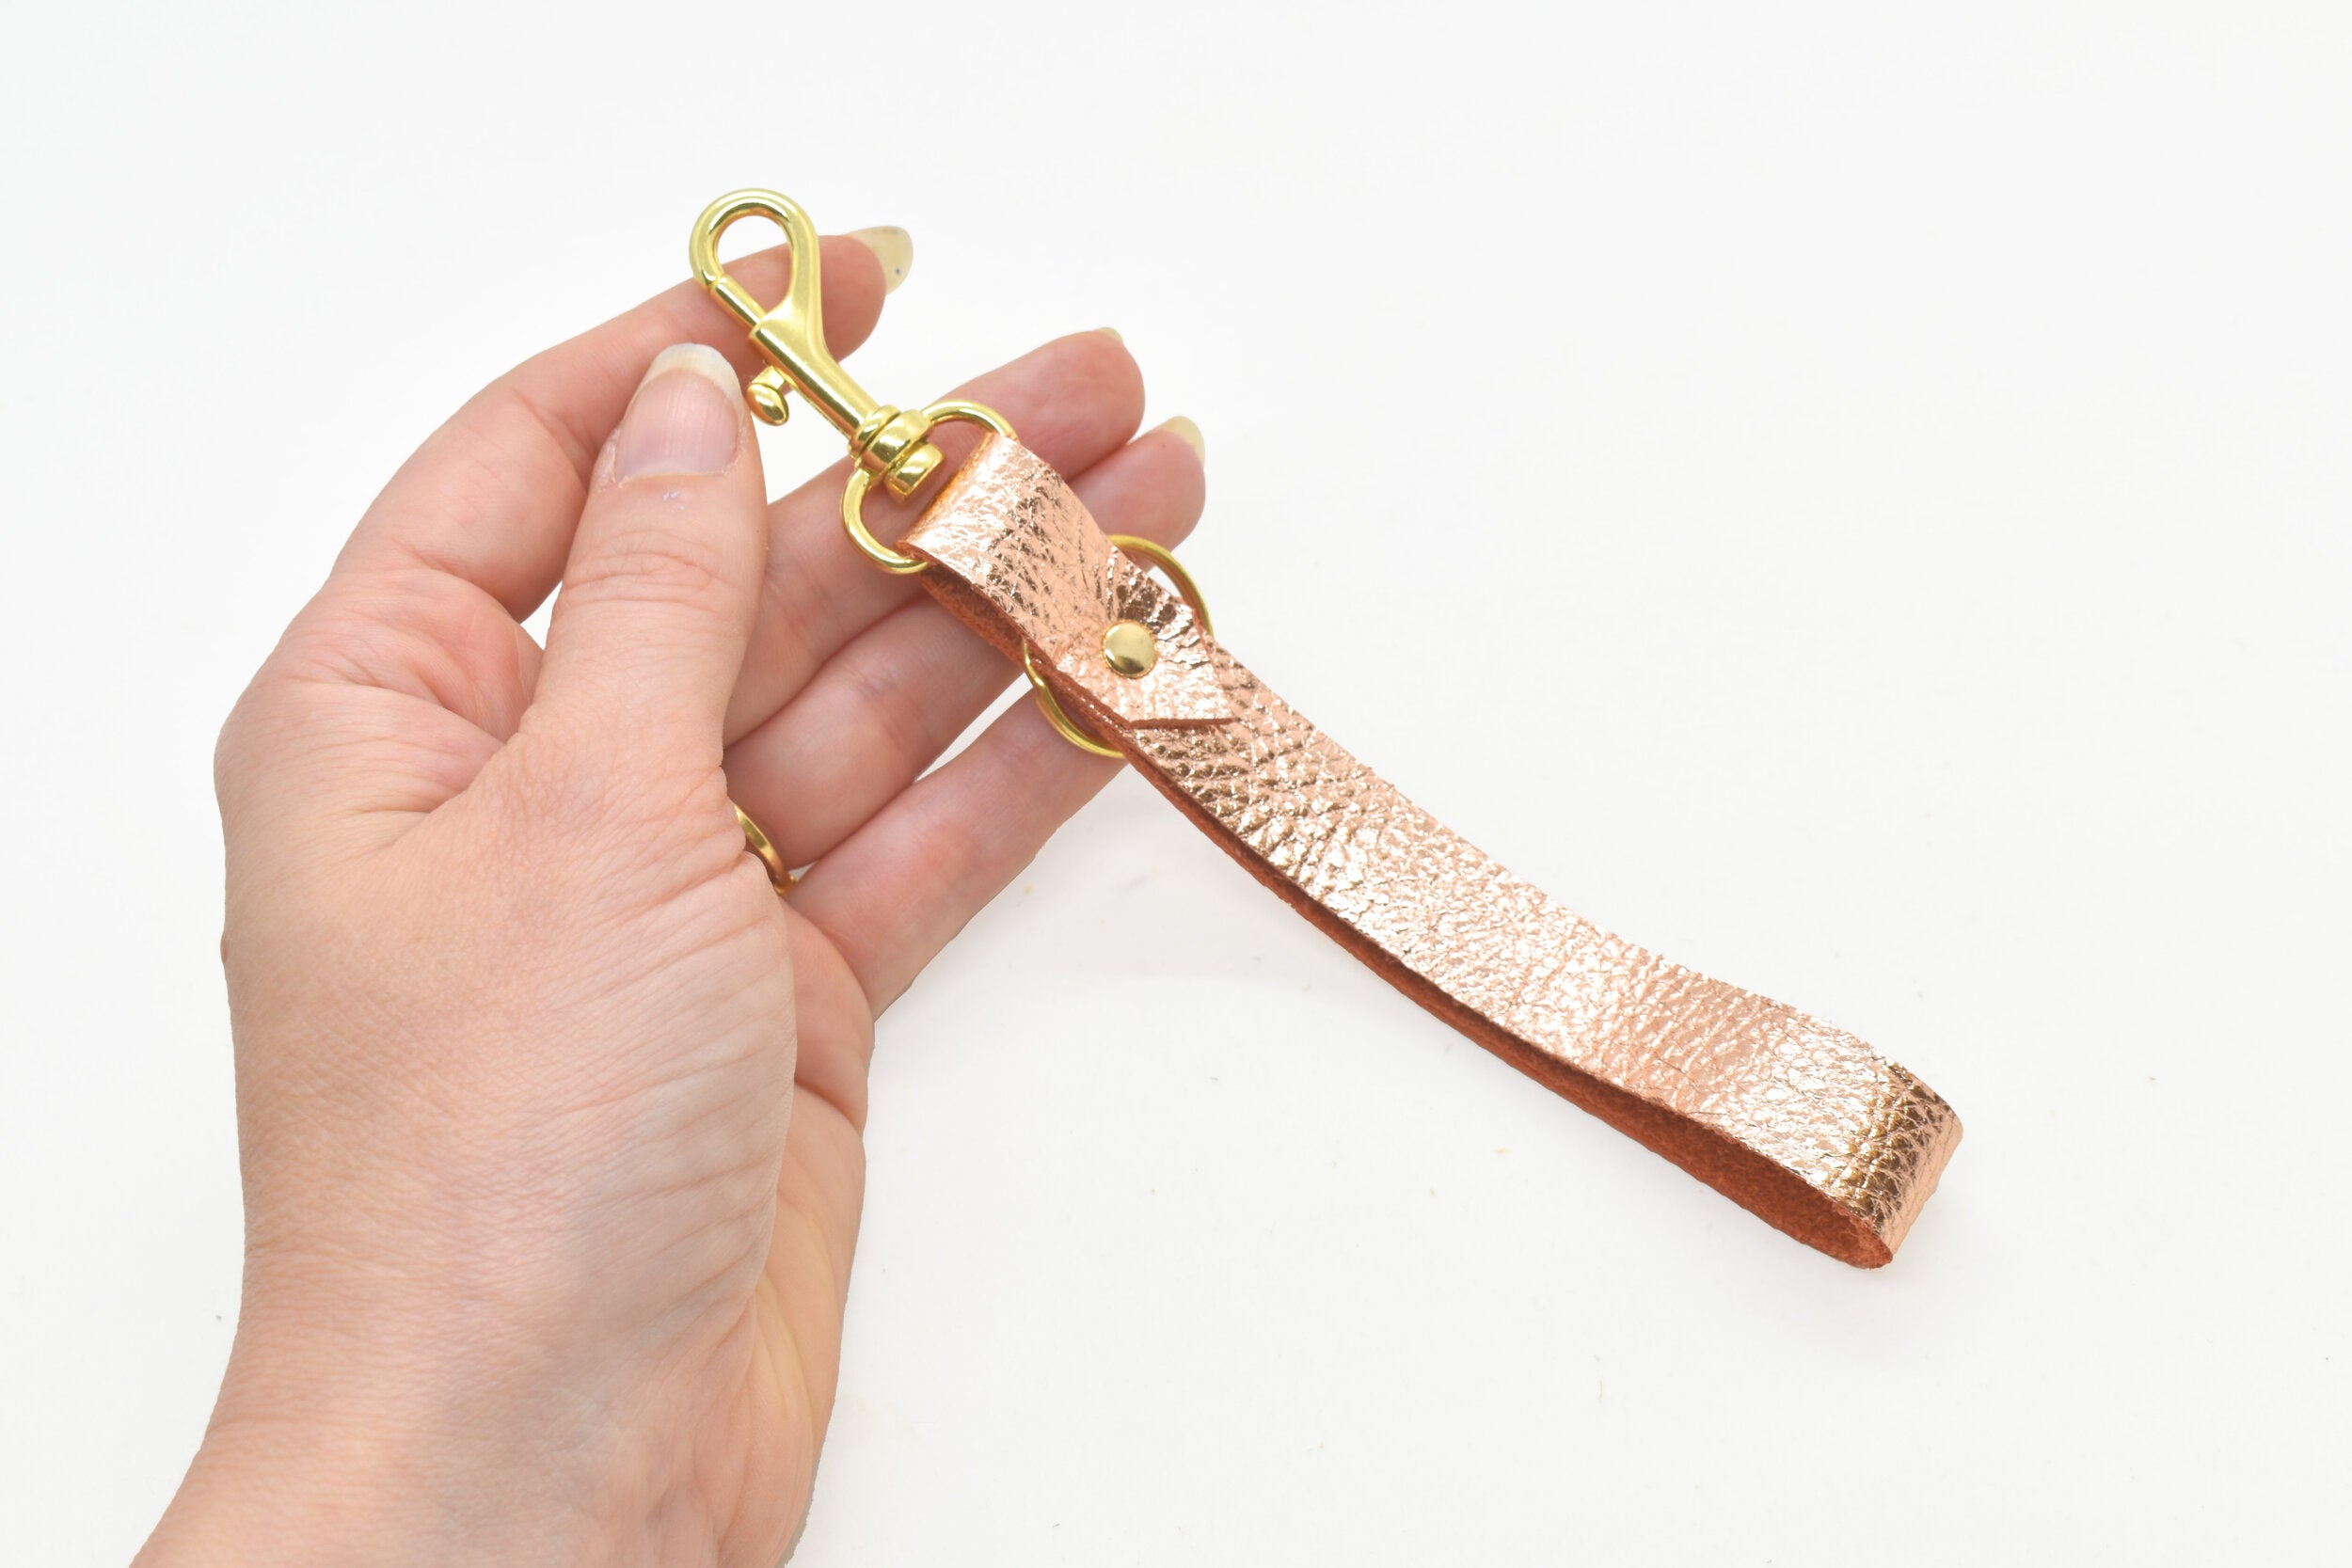 NSQFKALL Gold Bullion Gold Key Key Chain Alloy Gift Small Jewelry Bank  Chain Keychains Lanyard Leather